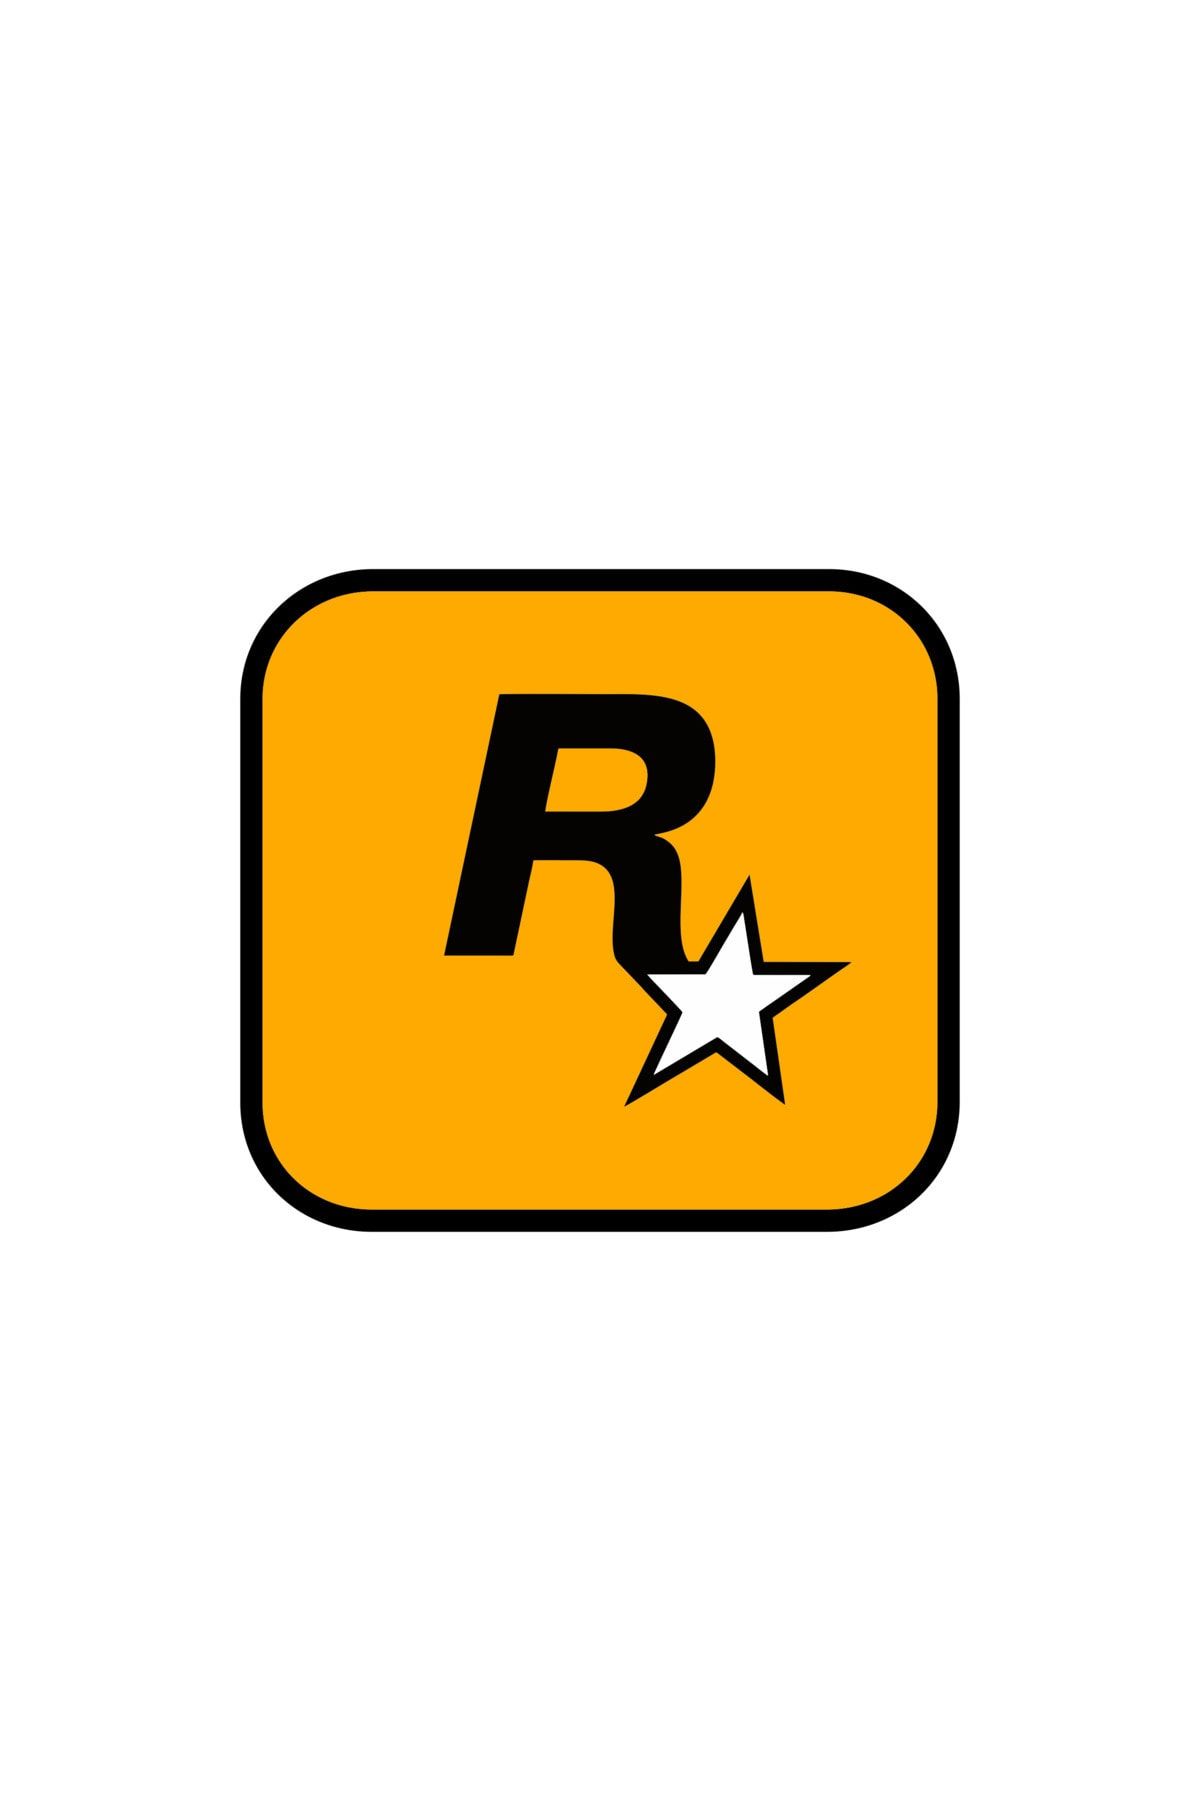 esticker 8 x 7 Cm Rockstar Games Sticker Laptop Auto Car Motor Sticker